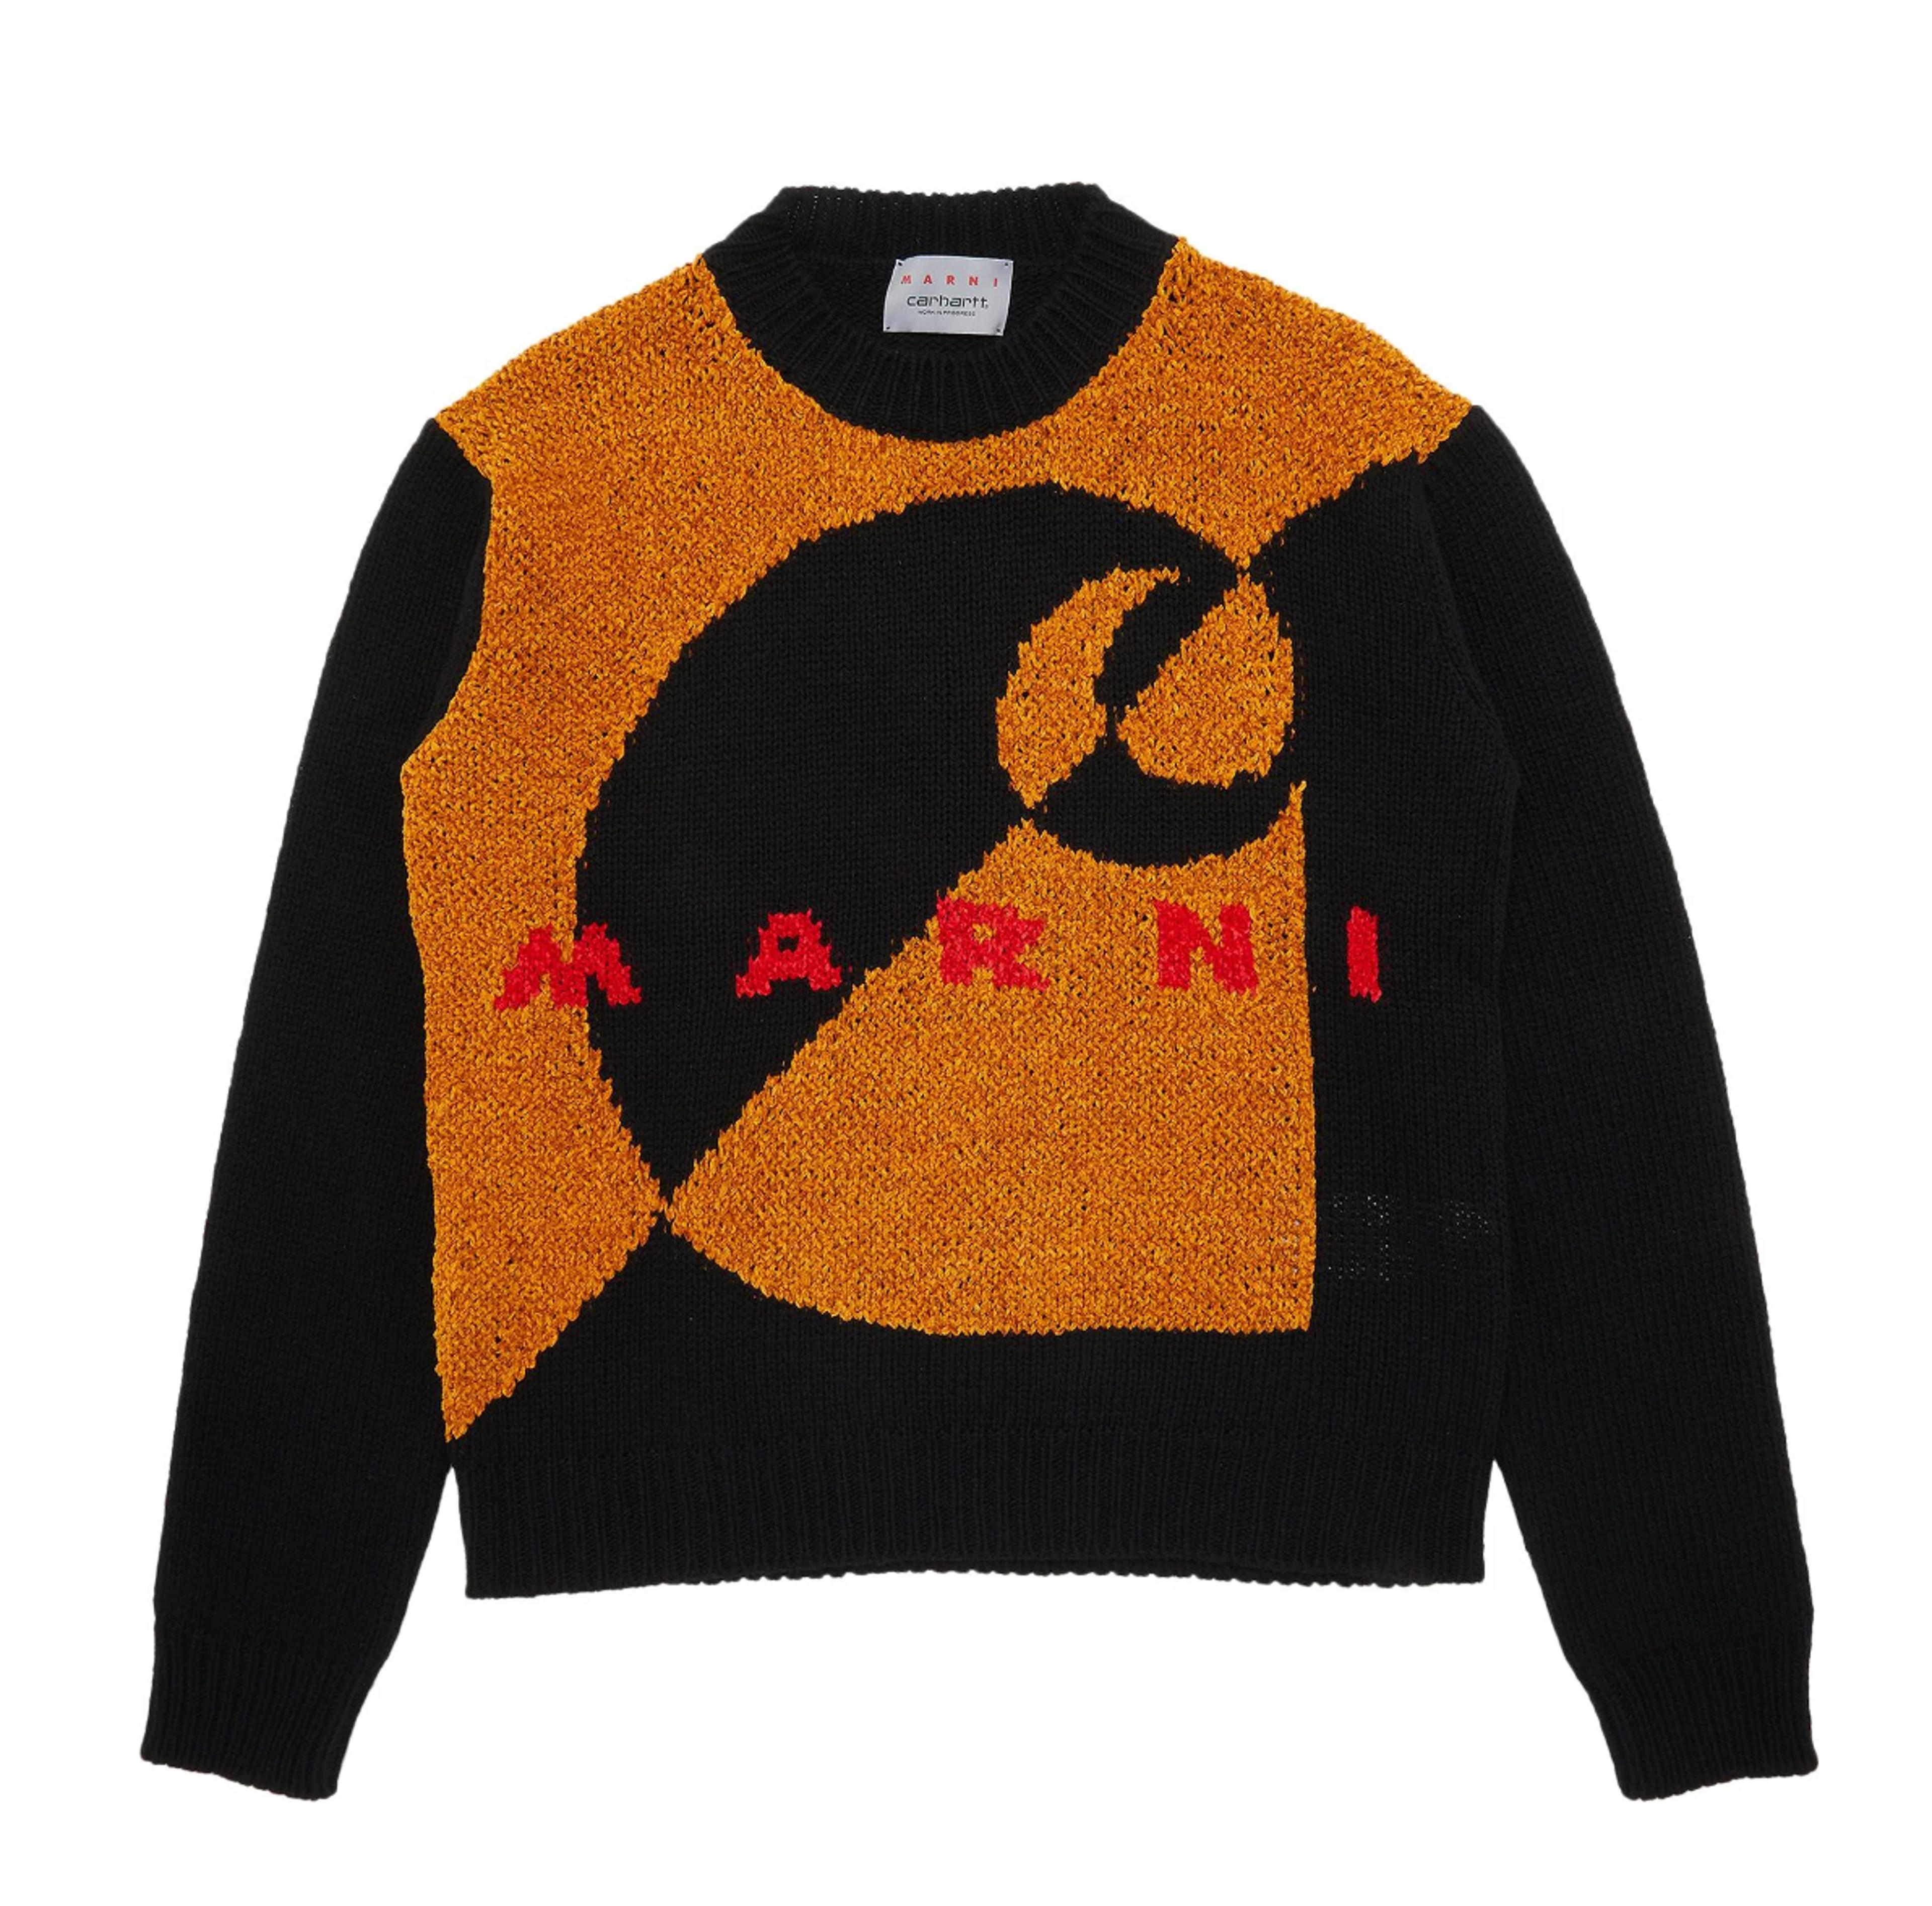 Marni x Carhartt WIP Logo Crewneck Sweater Black